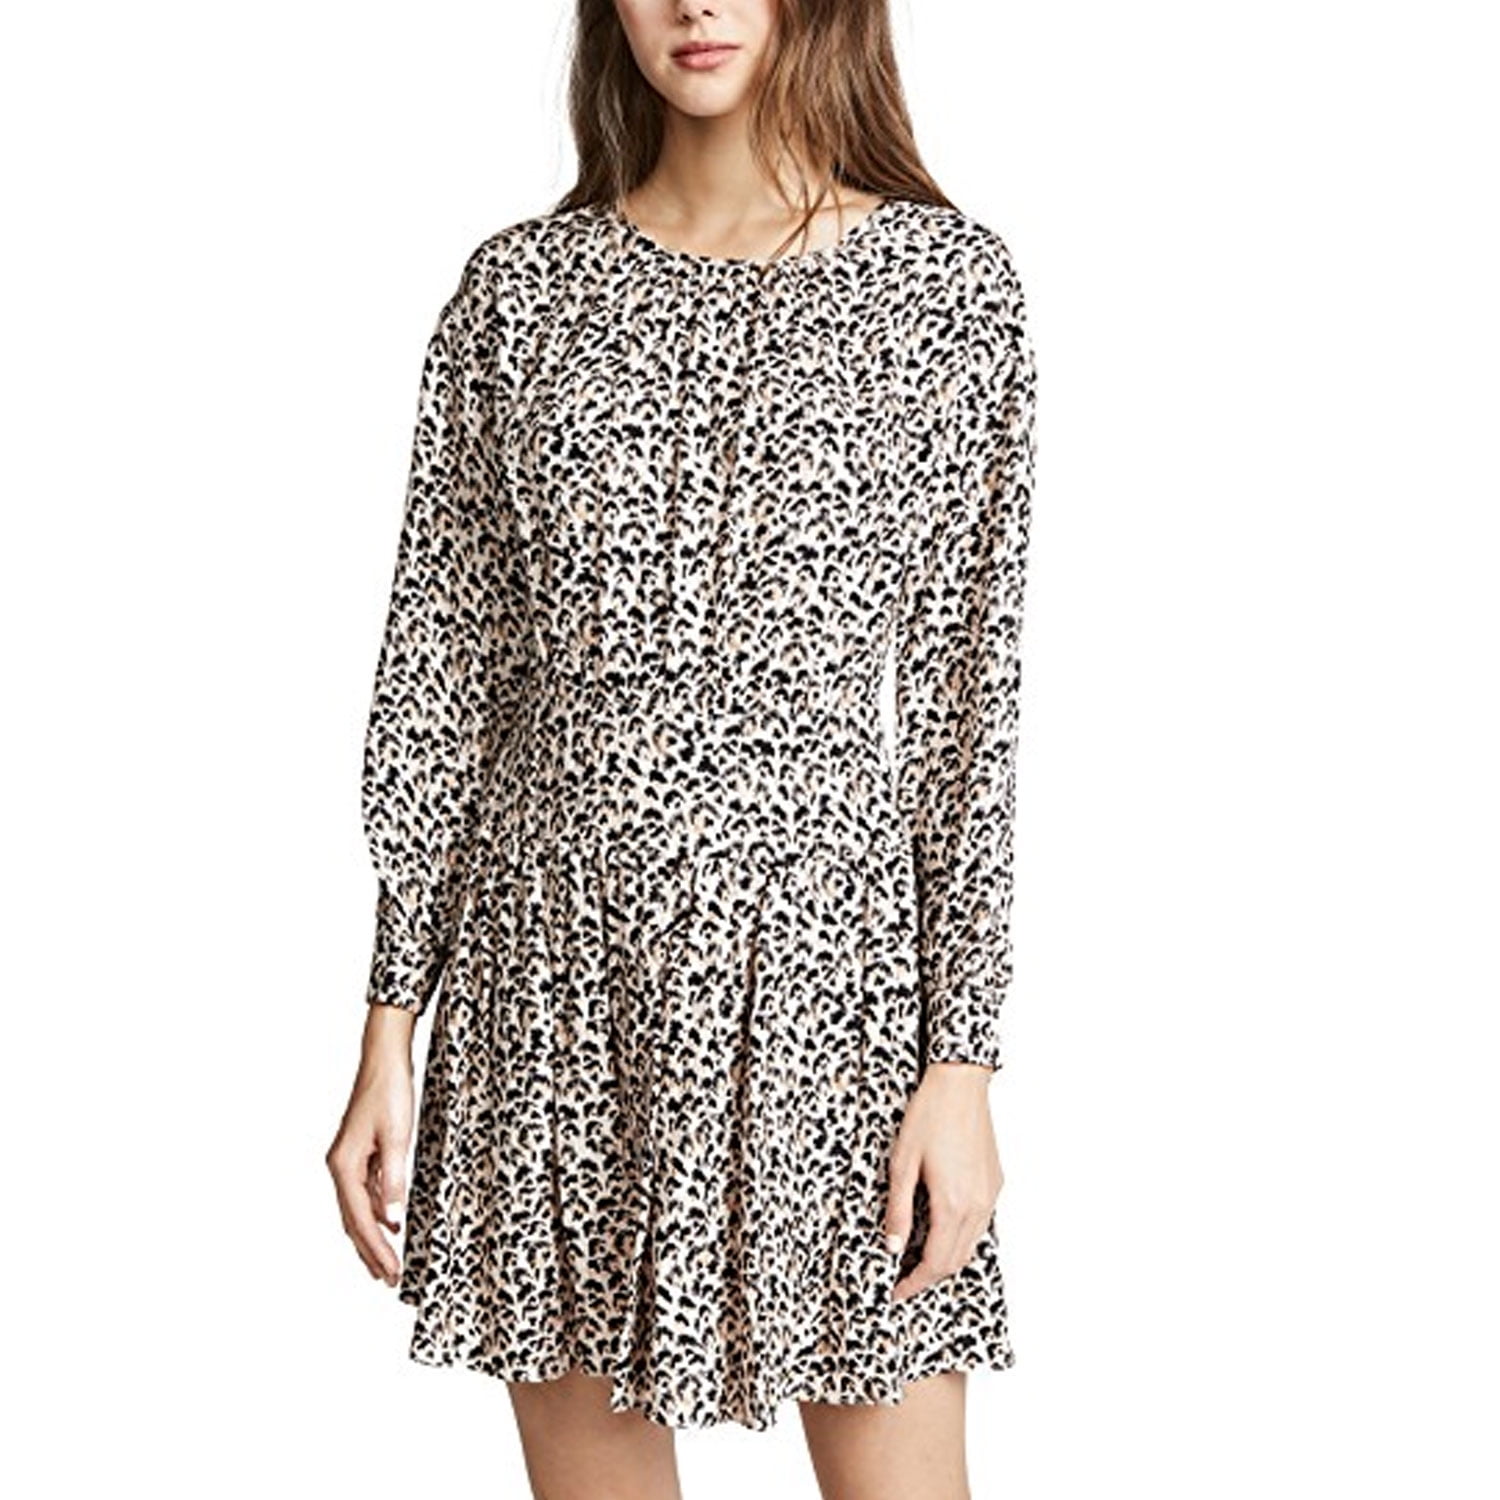 rebecca taylor leopard dress